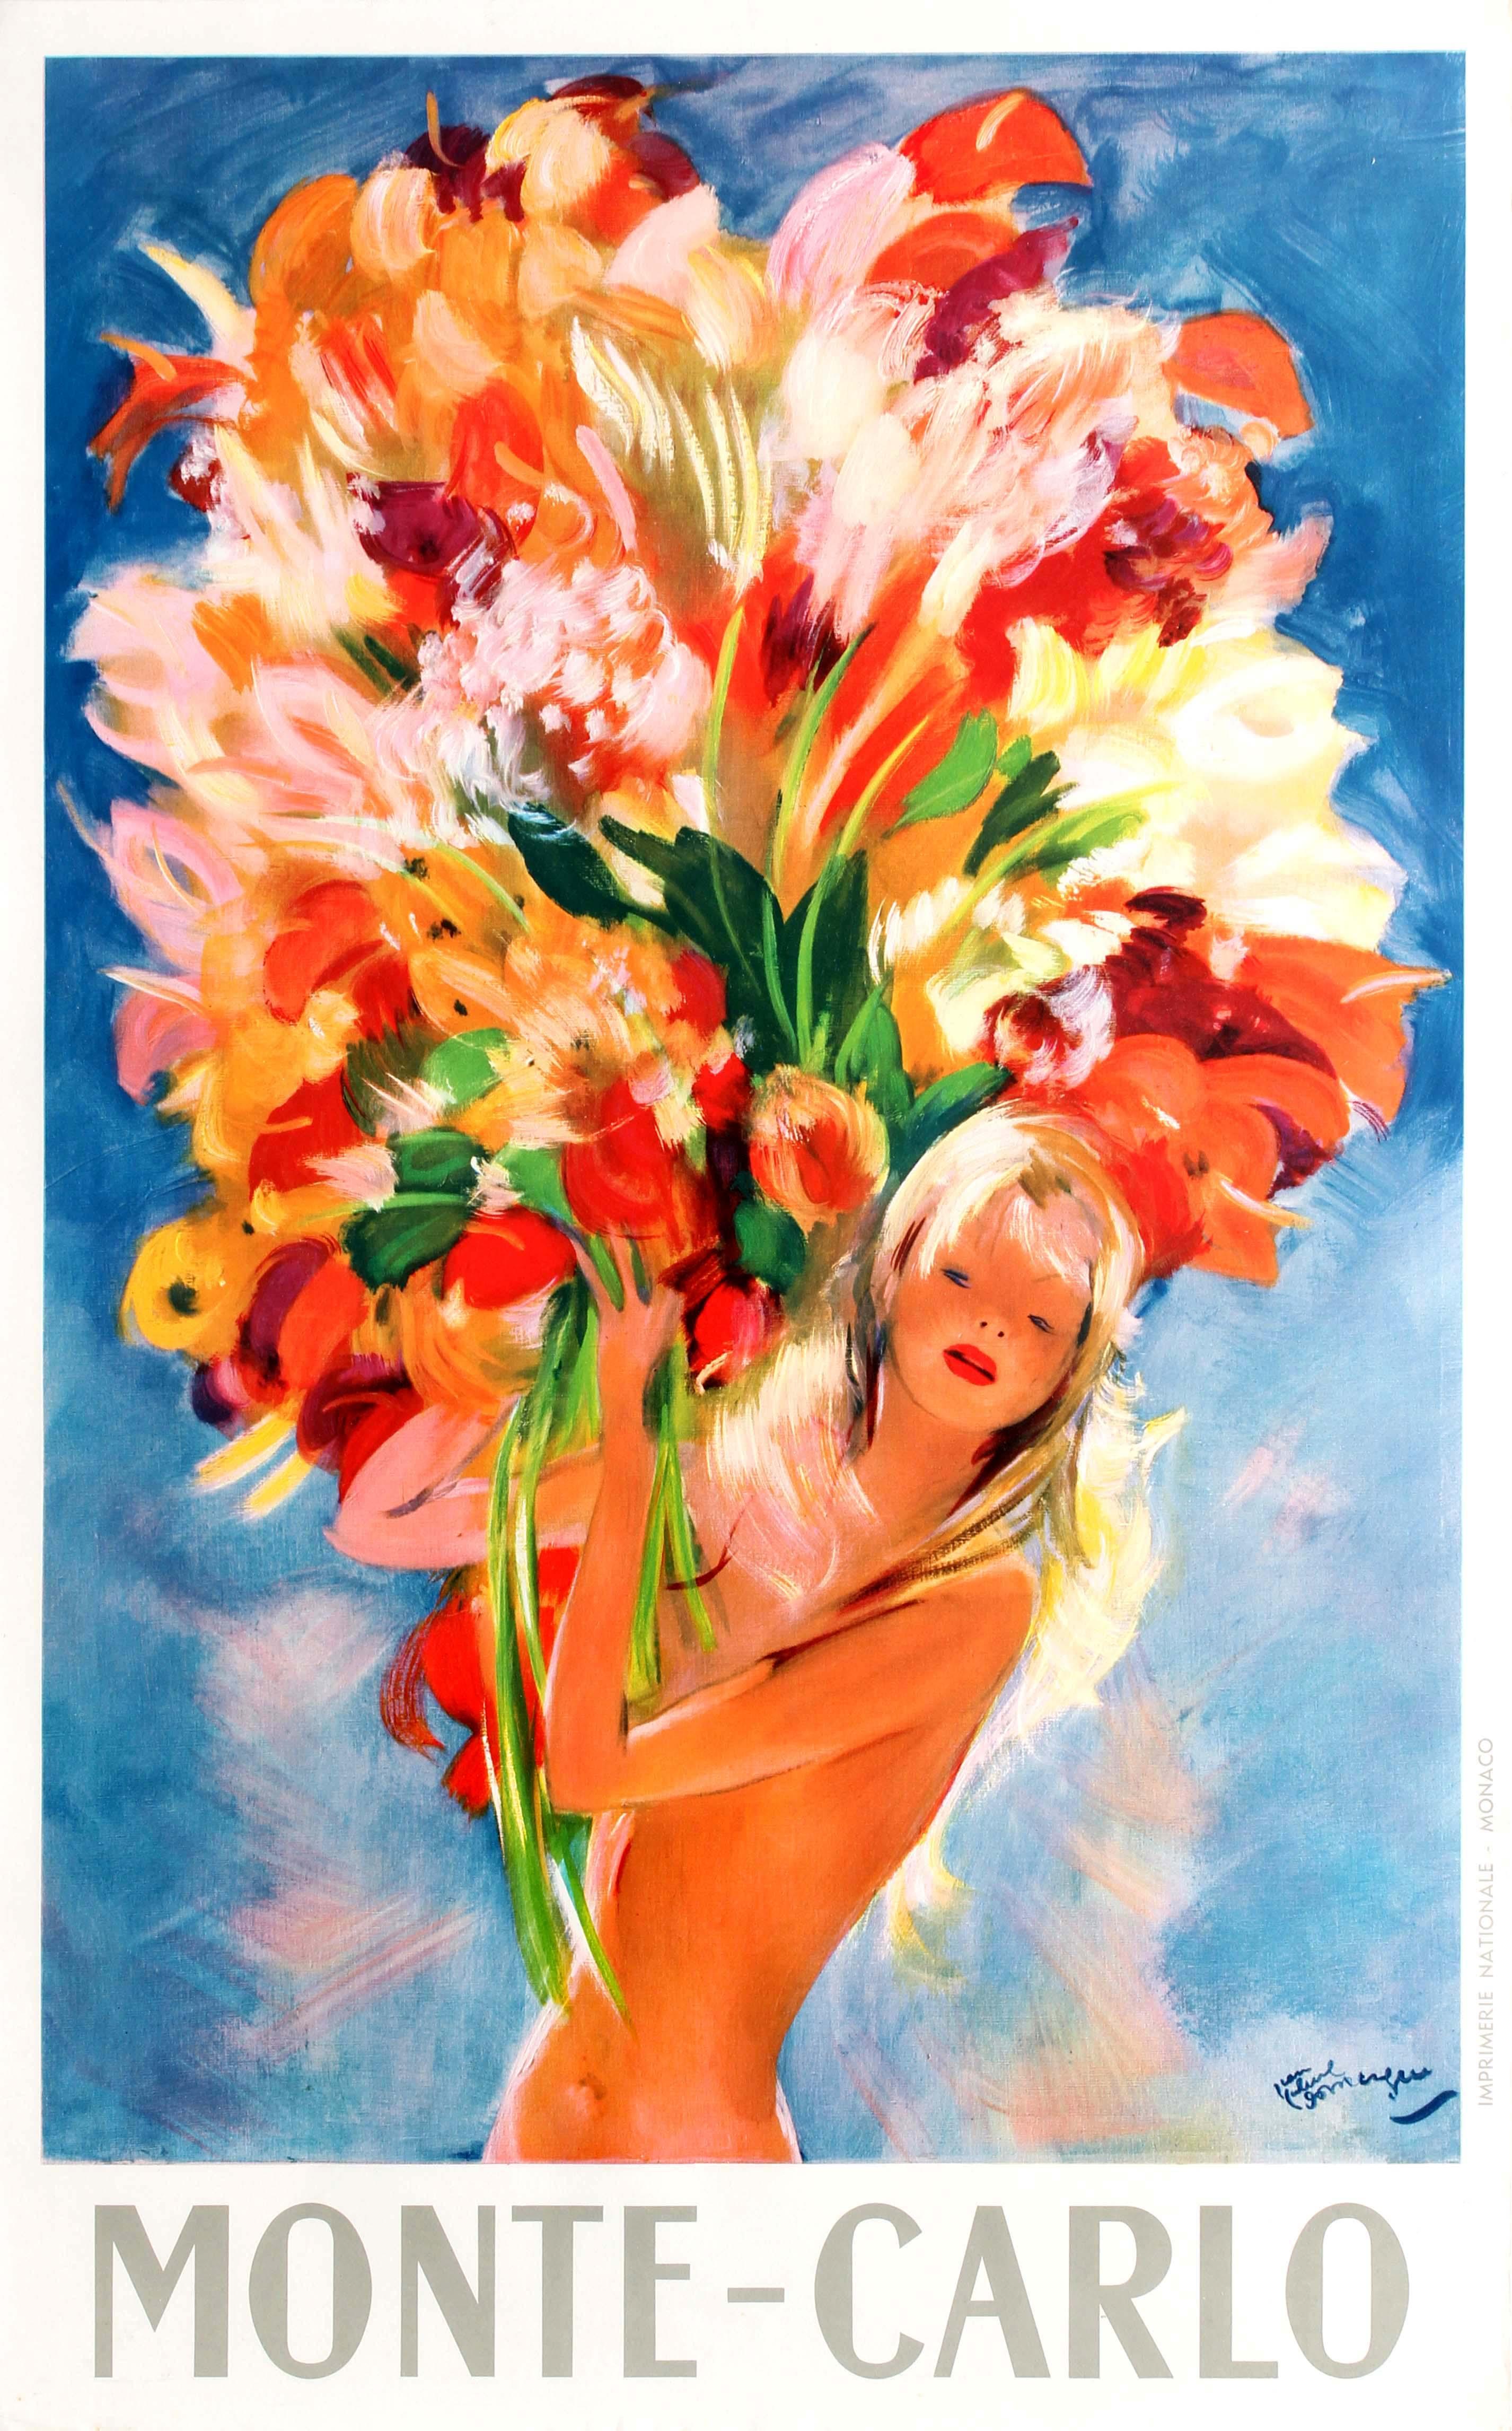 Jean-Gabriel Domergue Print - Original Vintage Monte Carlo Travel Poster Pin-Up Style Flower Girl by Domergue